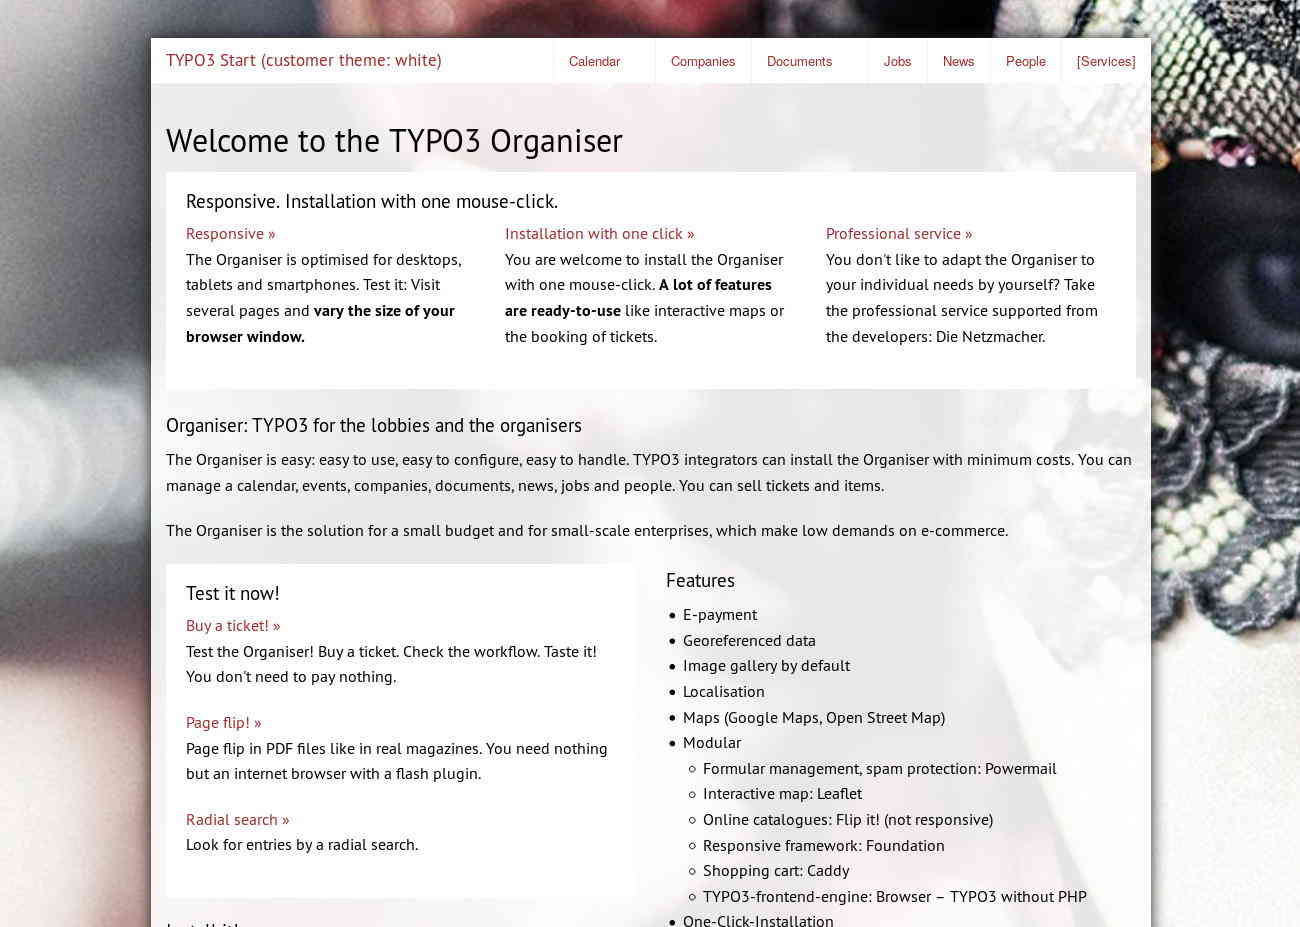 The white theme of Start TYPO3 Responsive +Customer